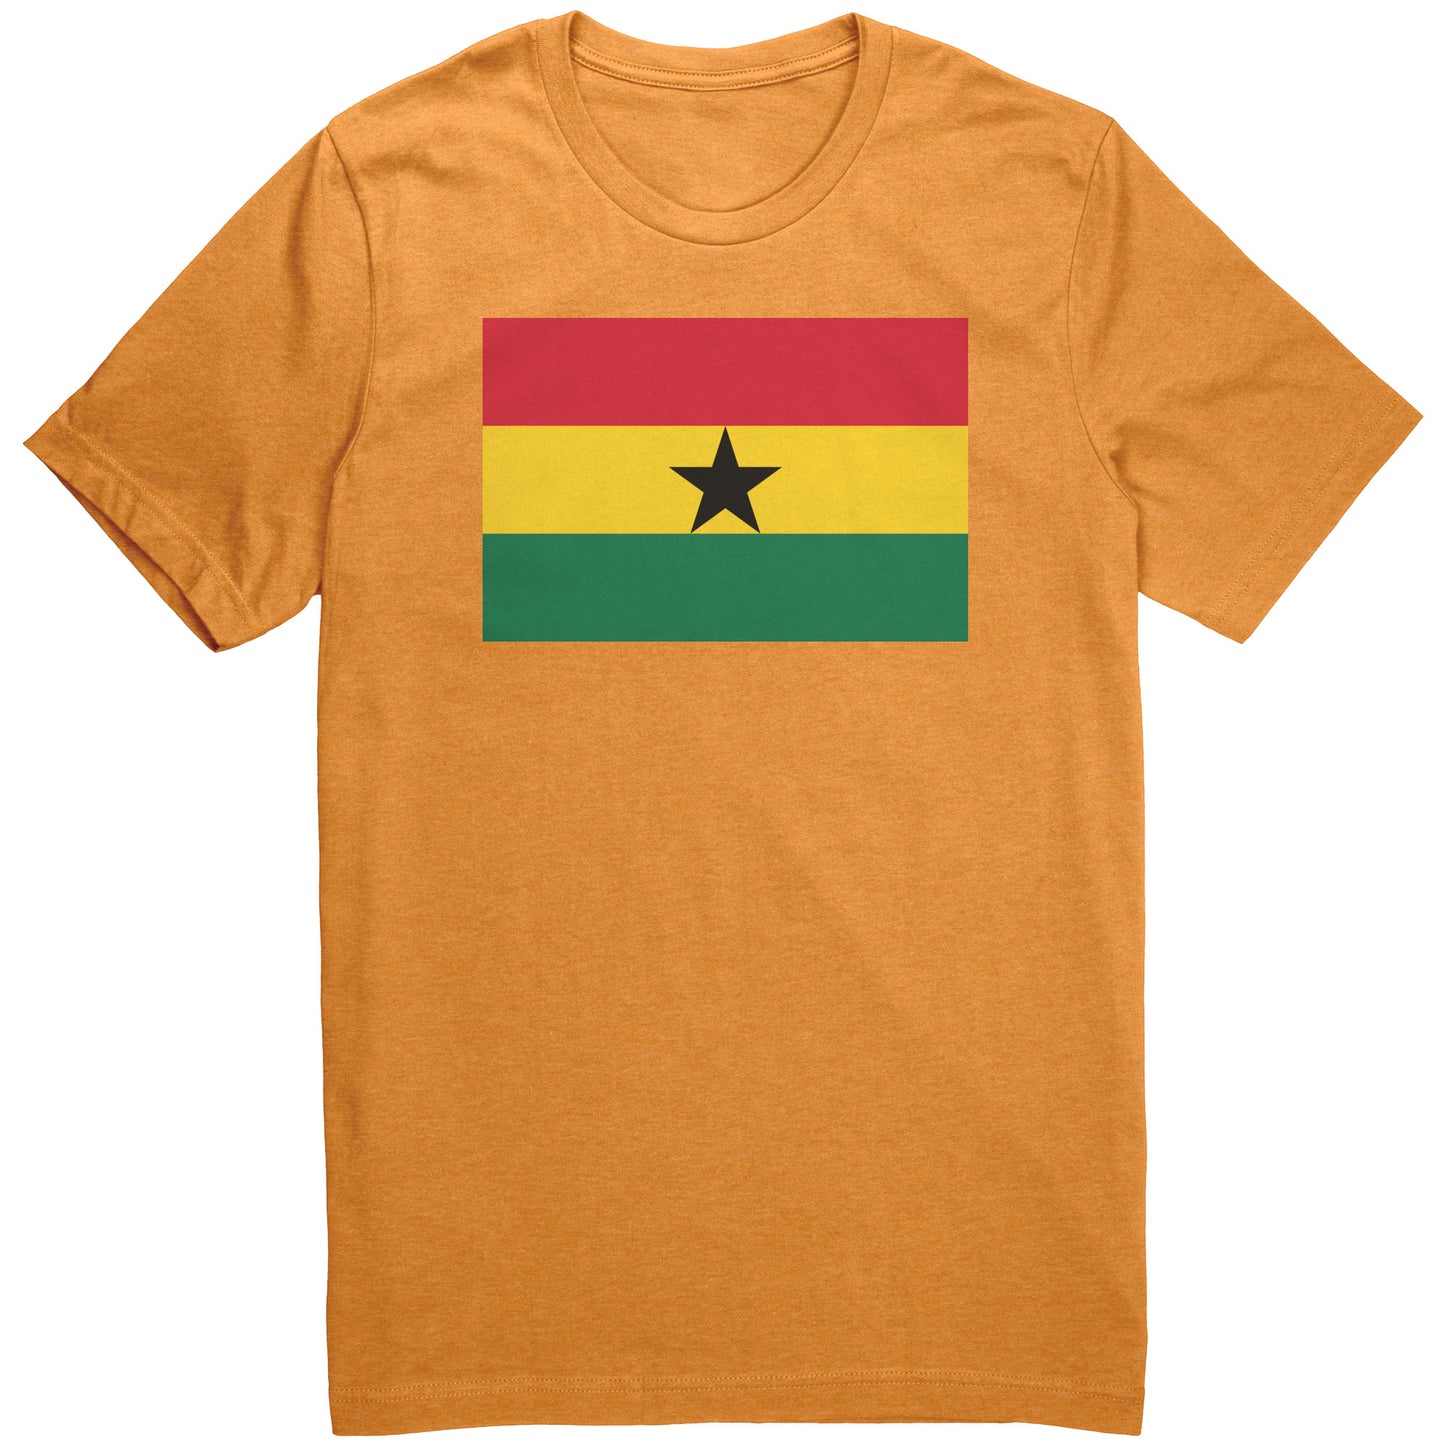 The Flag Of Ghana